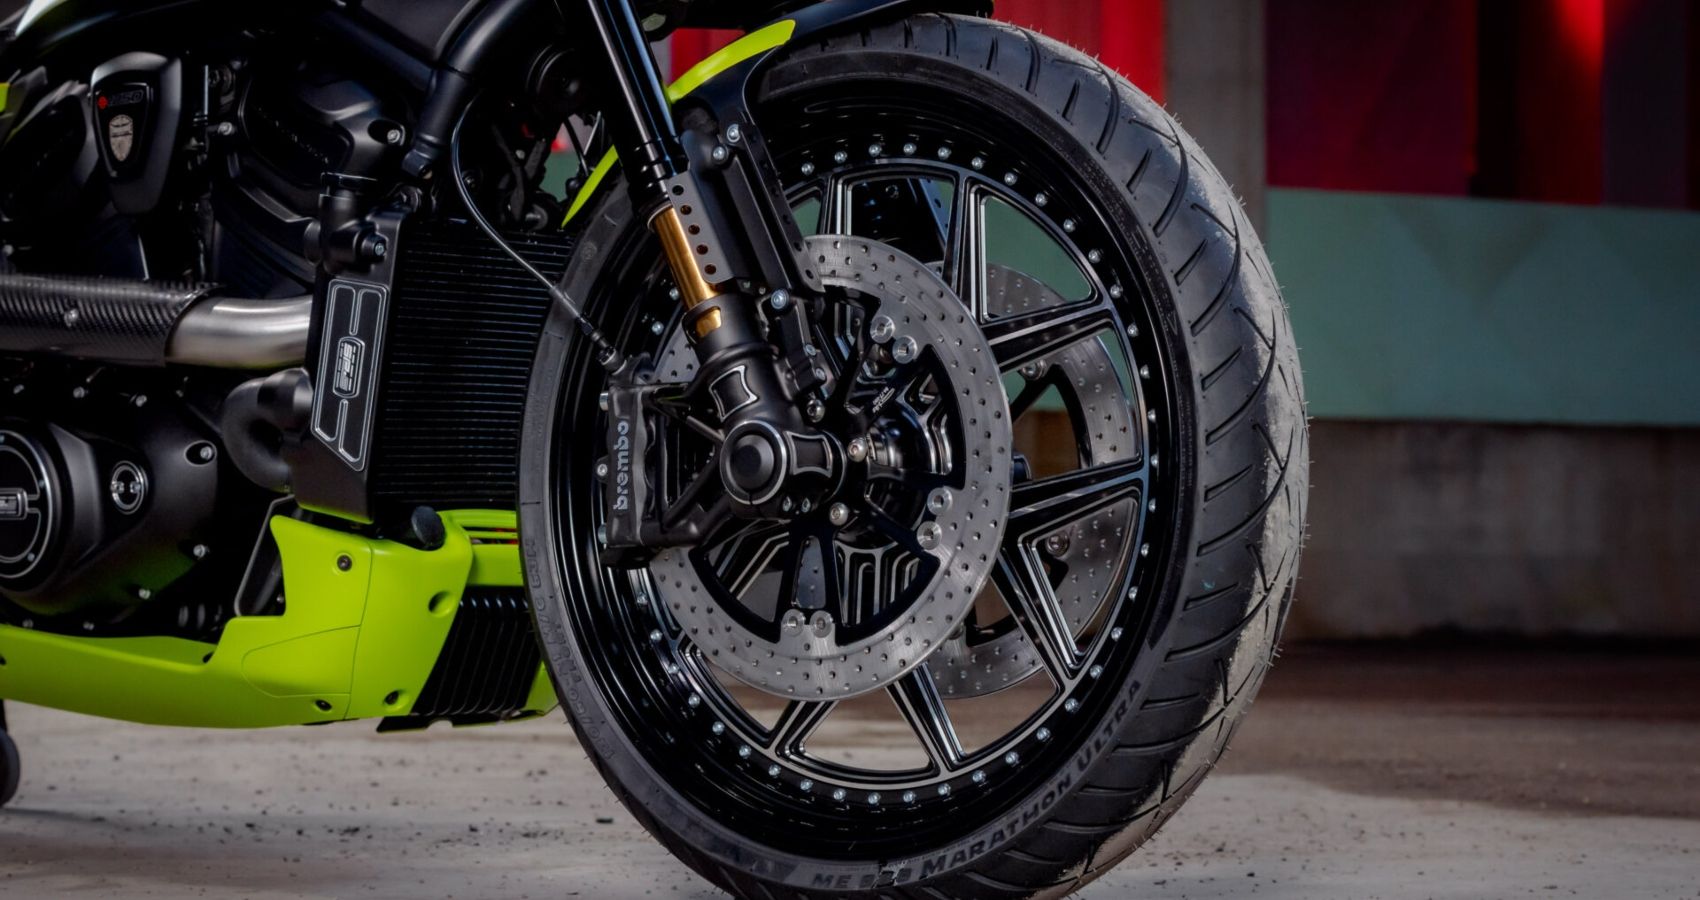 Customized Harley-Davidson Sportster Motorcycles by Thunderbike